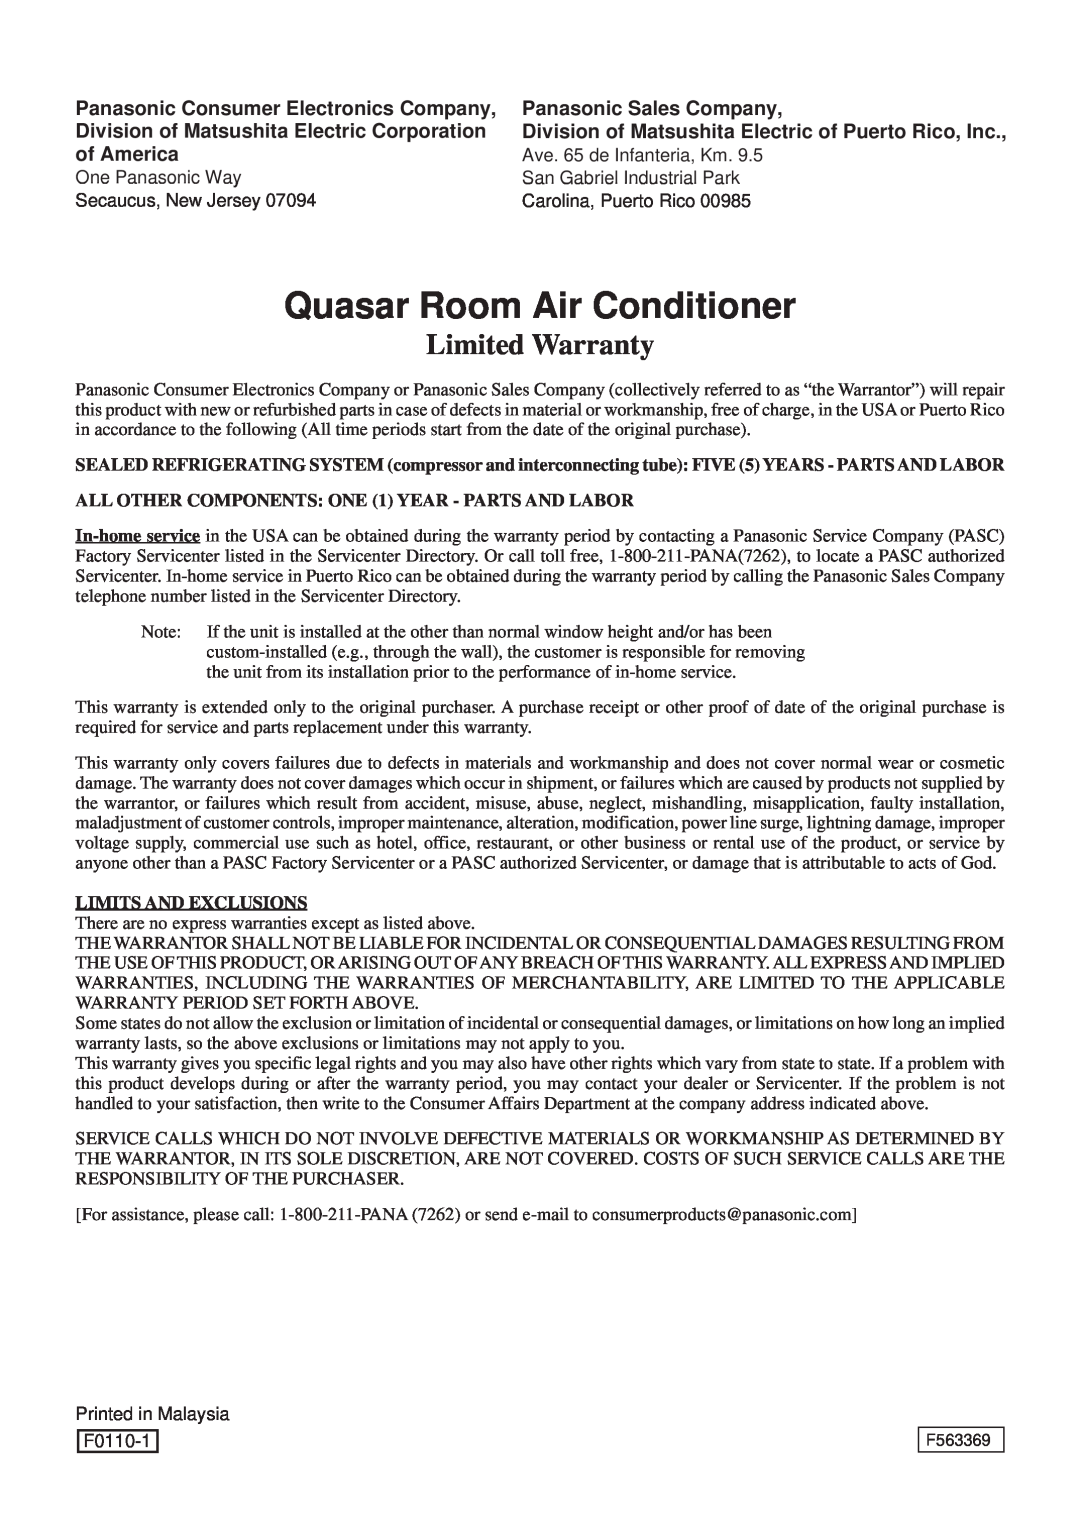 Quasar HQ-2081SH Quasar Room Air Conditioner, Limited Warranty, Panasonic Consumer Electronics Company, of America 